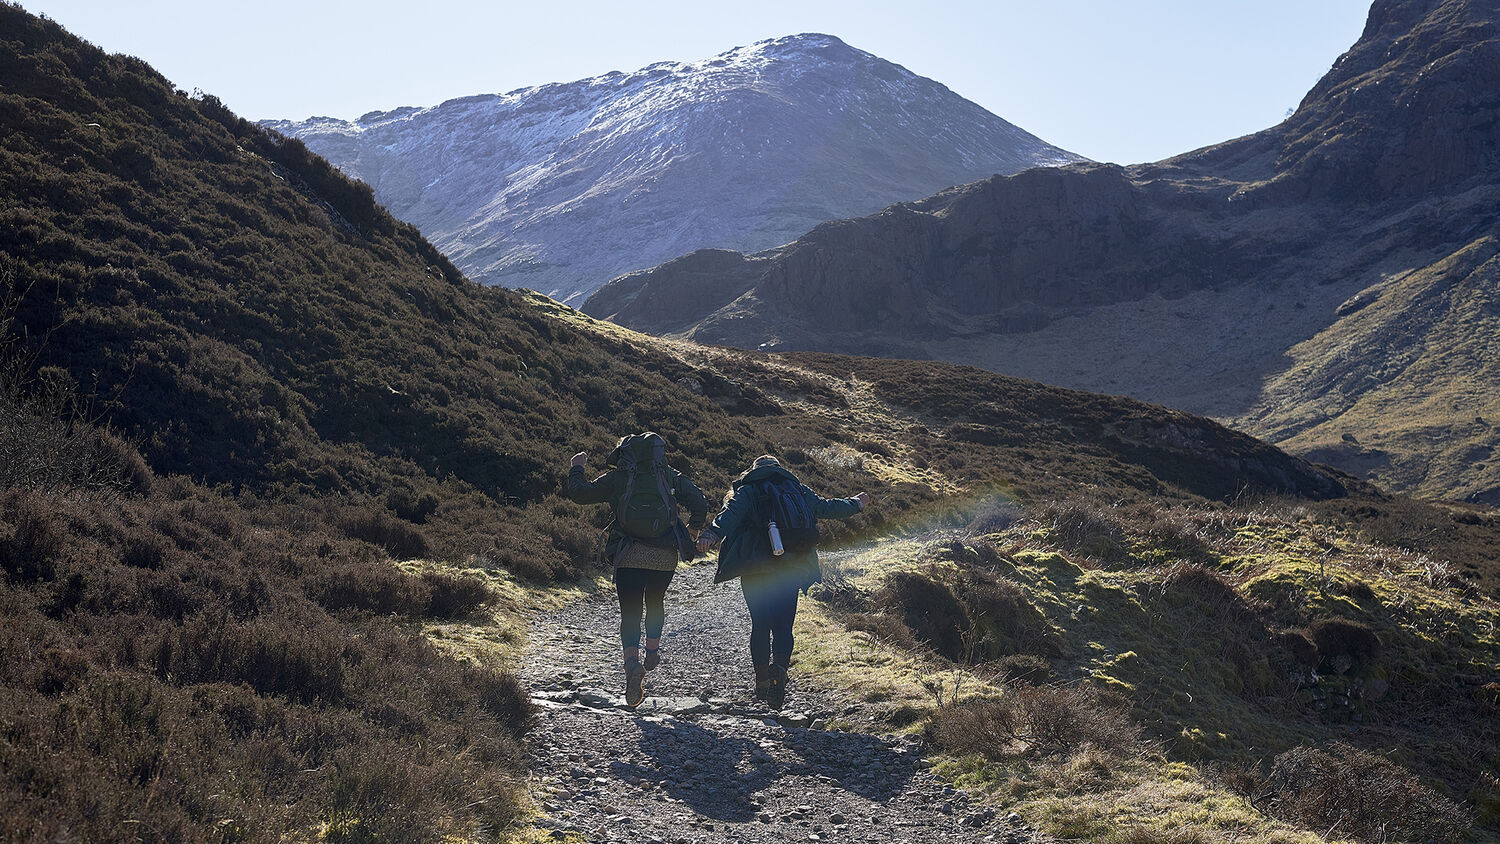 Two people walk on a path through the mountainous landscape of Glencoe.